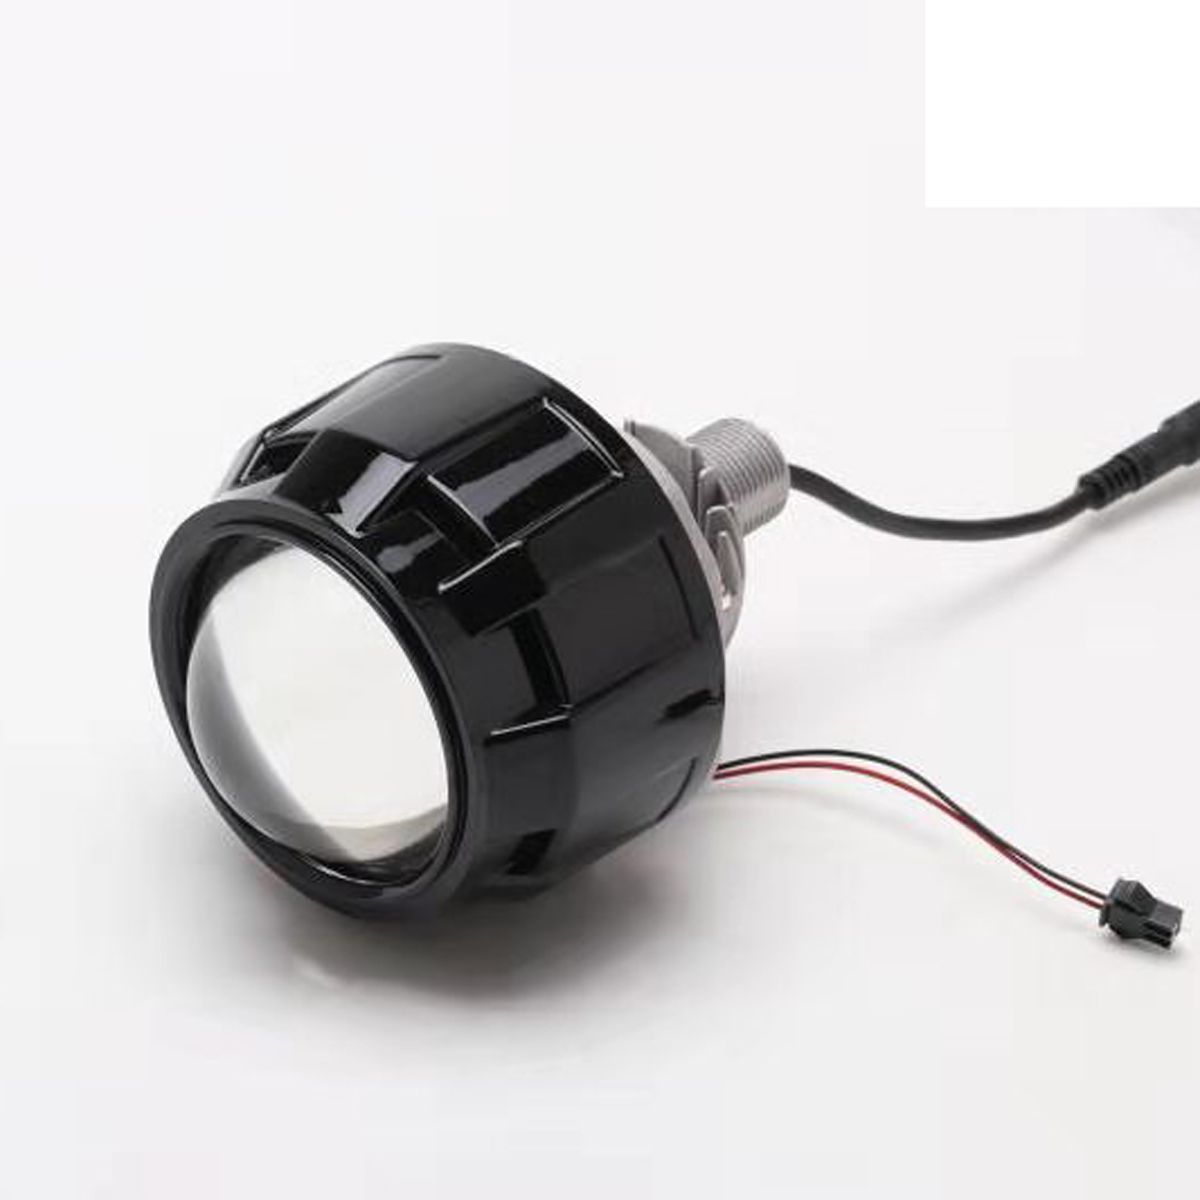 25-Inch-H4-Bi-LED-Projector-Lens-Headlights-35W-3800LM-5000K-LHD-For-Car-Retrofit-1549590